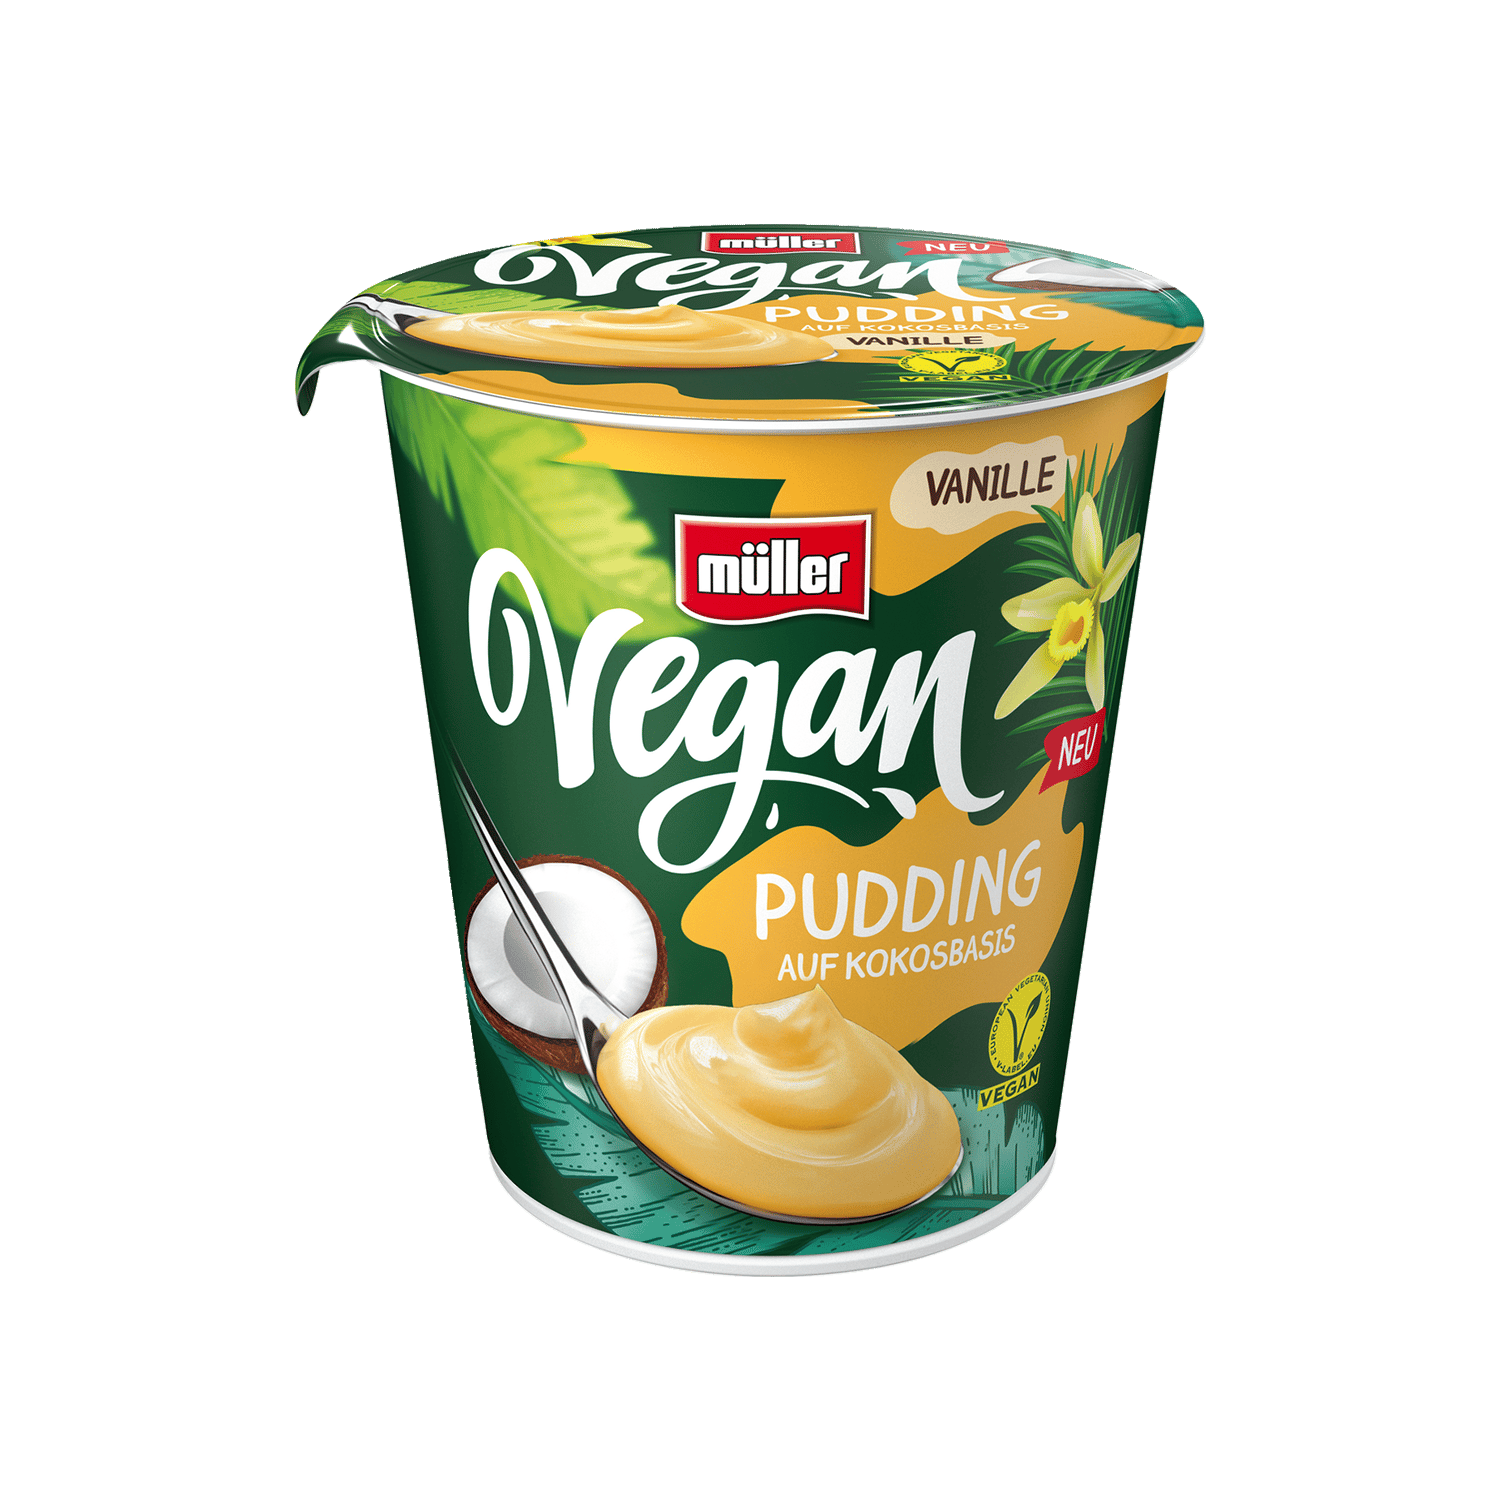 Vegan Pudding Vanille, 300g